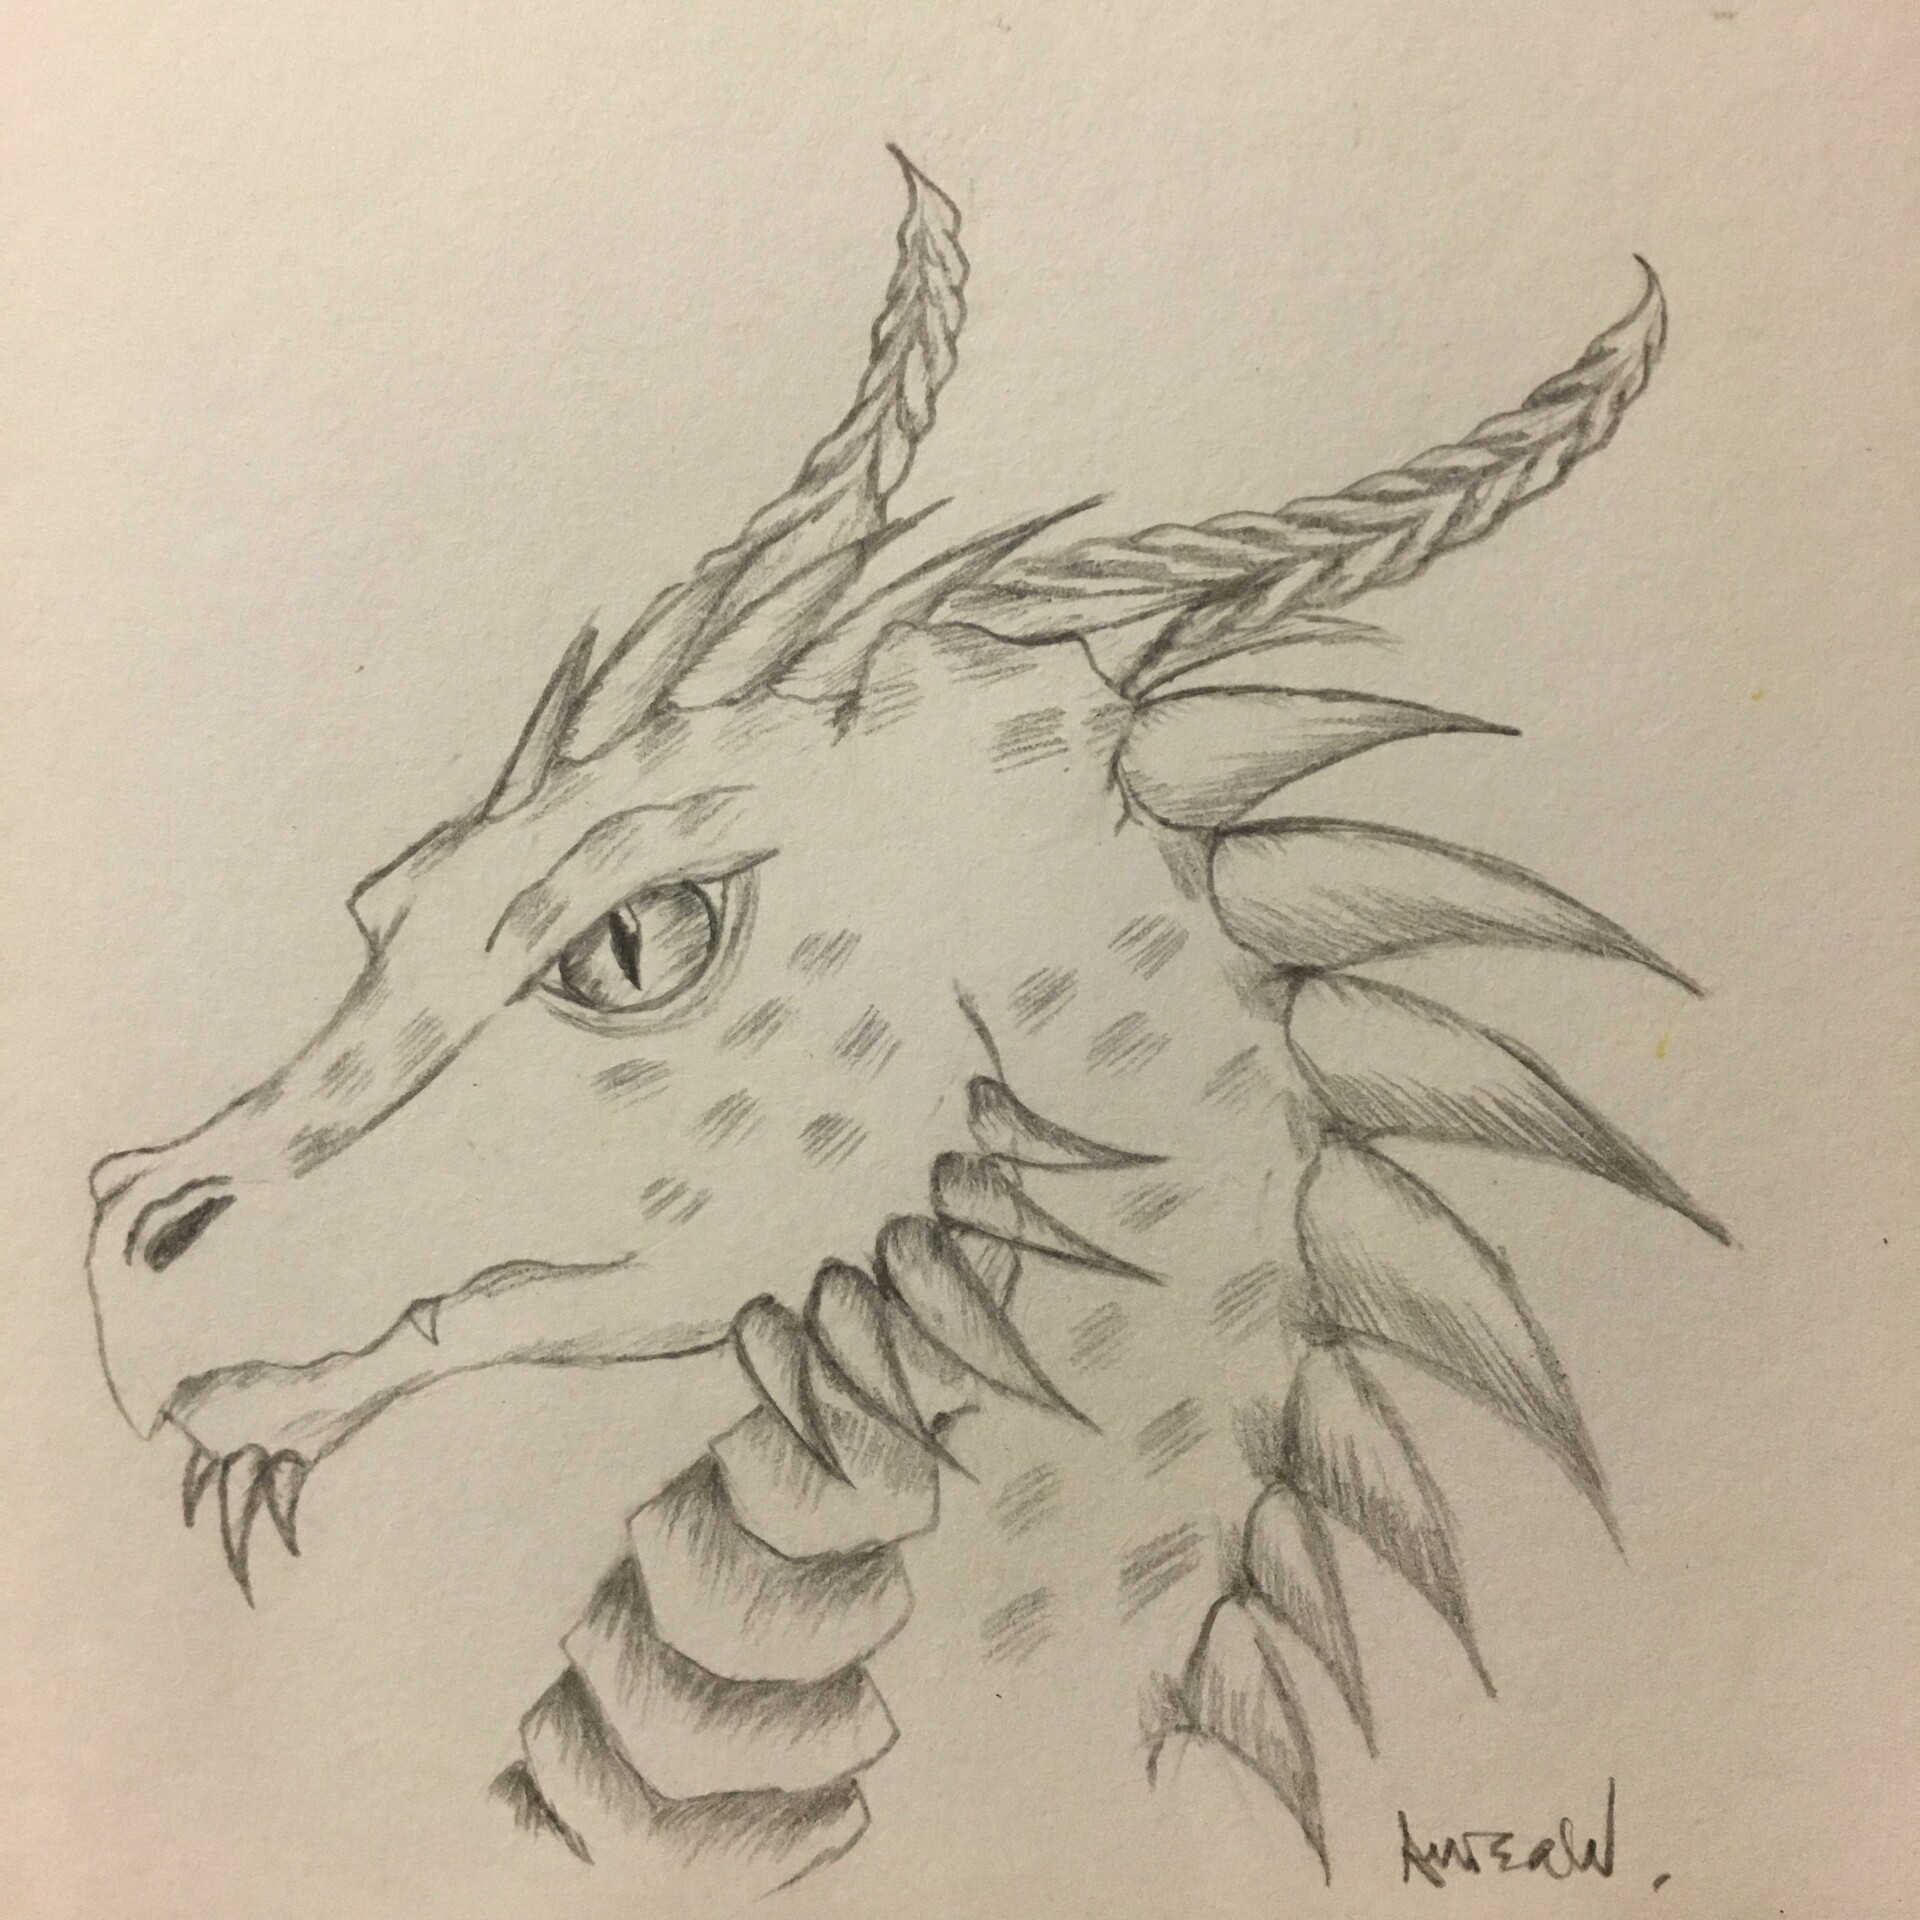 dragon head drawings in pencil